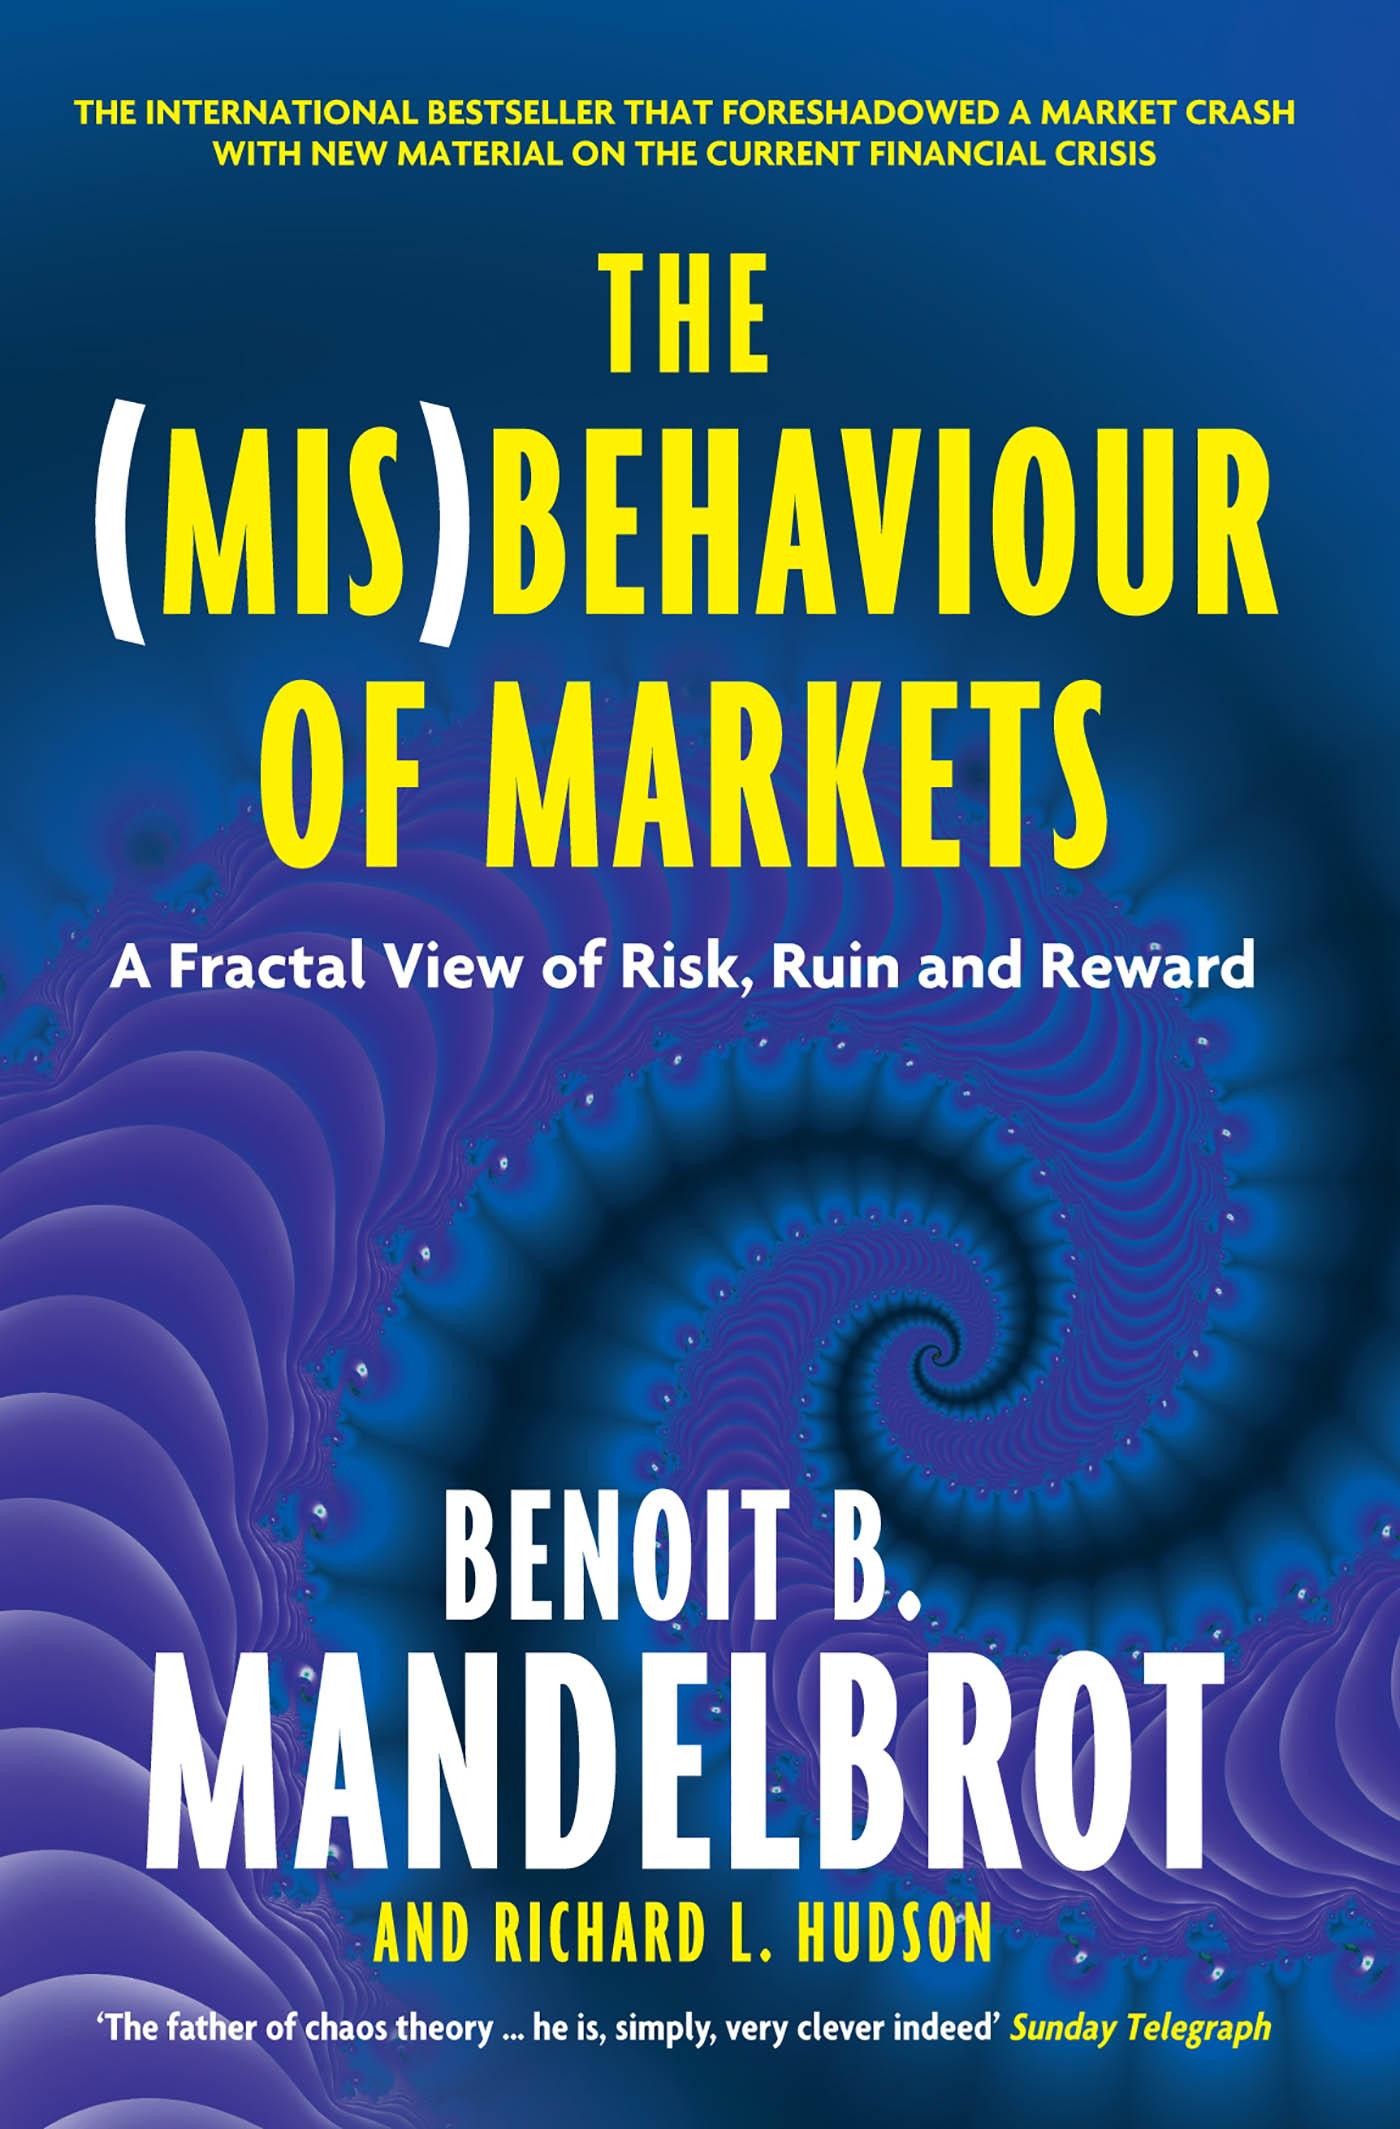 Mandelbrot, Benoit B. (mis) behaviour of markets 